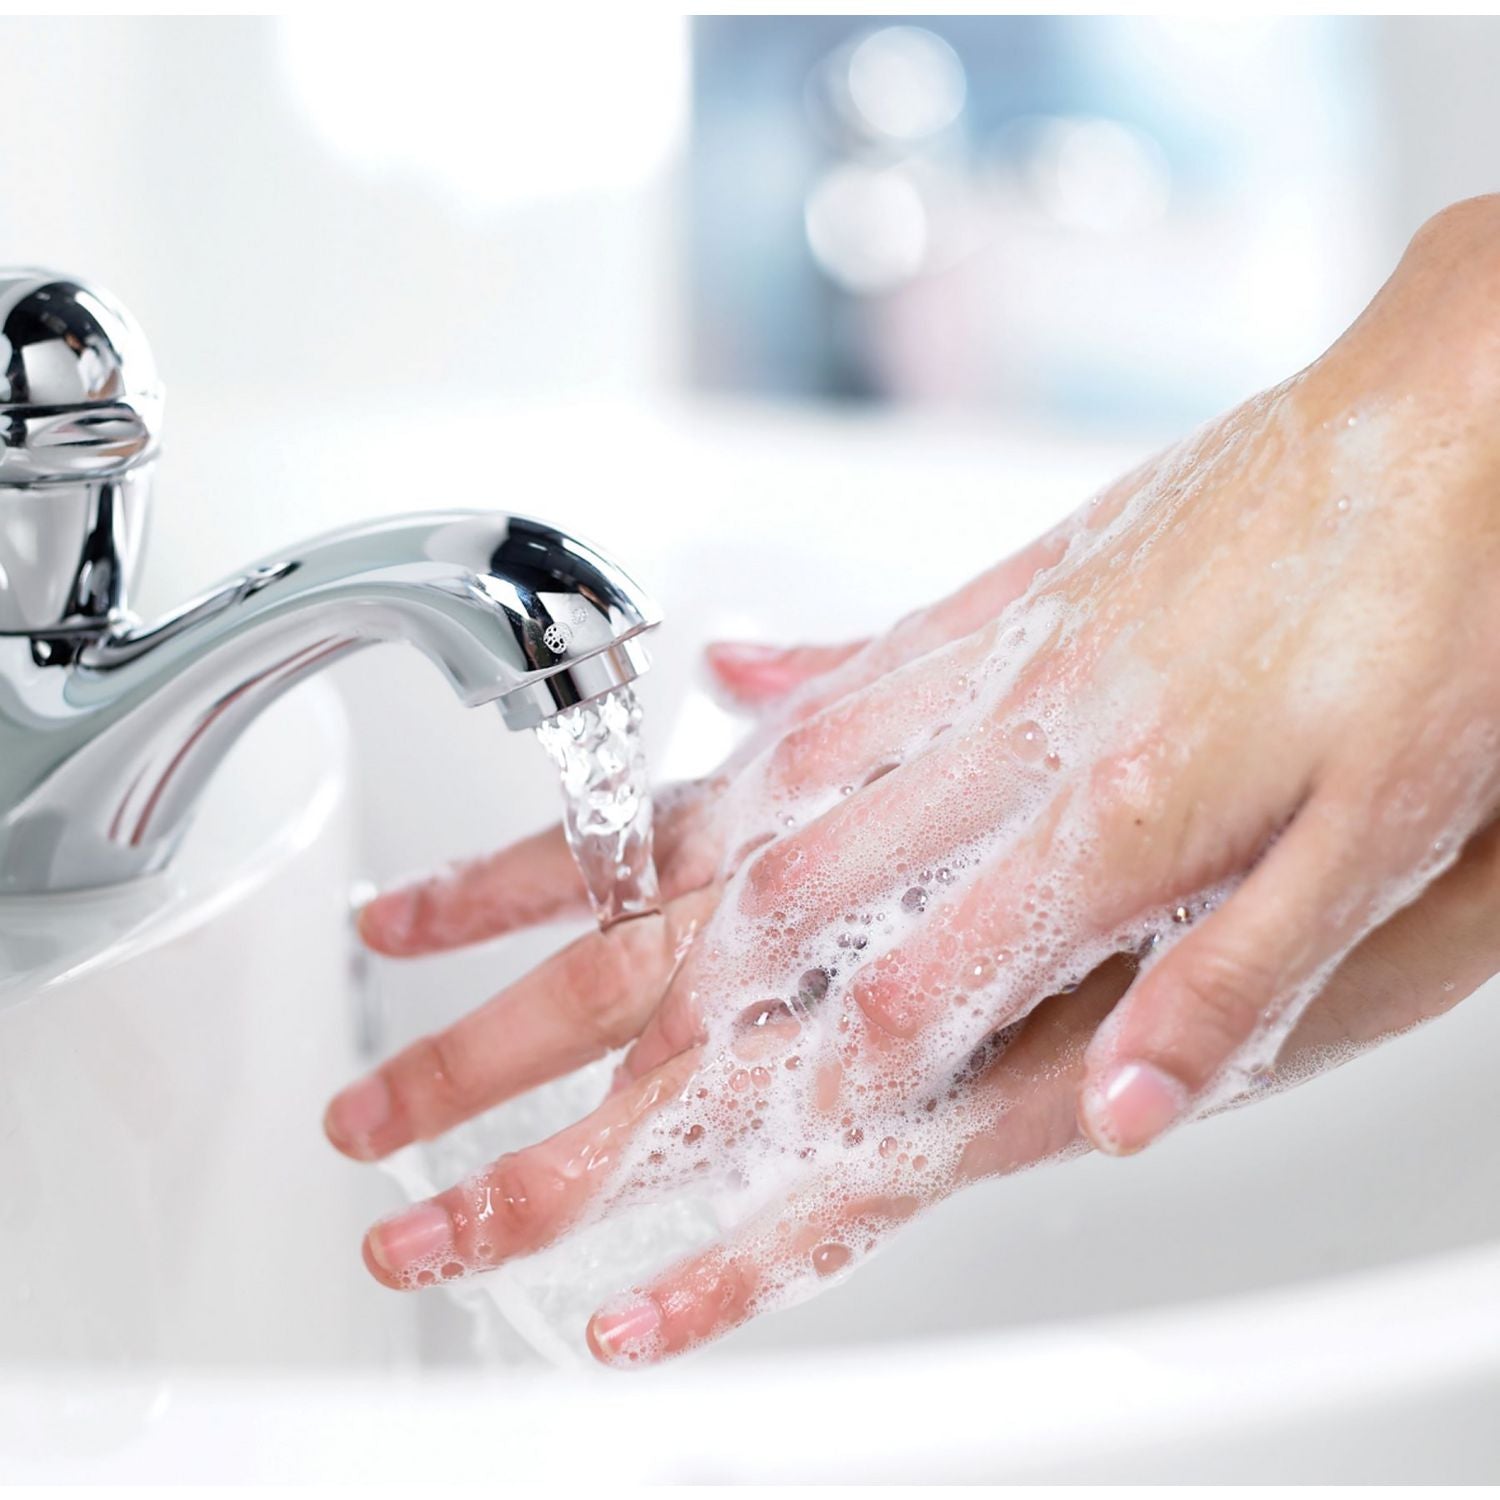 SC Johnson Hypoallergenic Foam Hand Soap - 40.6 fl oz (1200 mL) - Dirt Remover, Kill Germs - Hand - Moisturizing - Clear - Unscented, Dye-free, Anti-irritant - 3 / Carton - 2